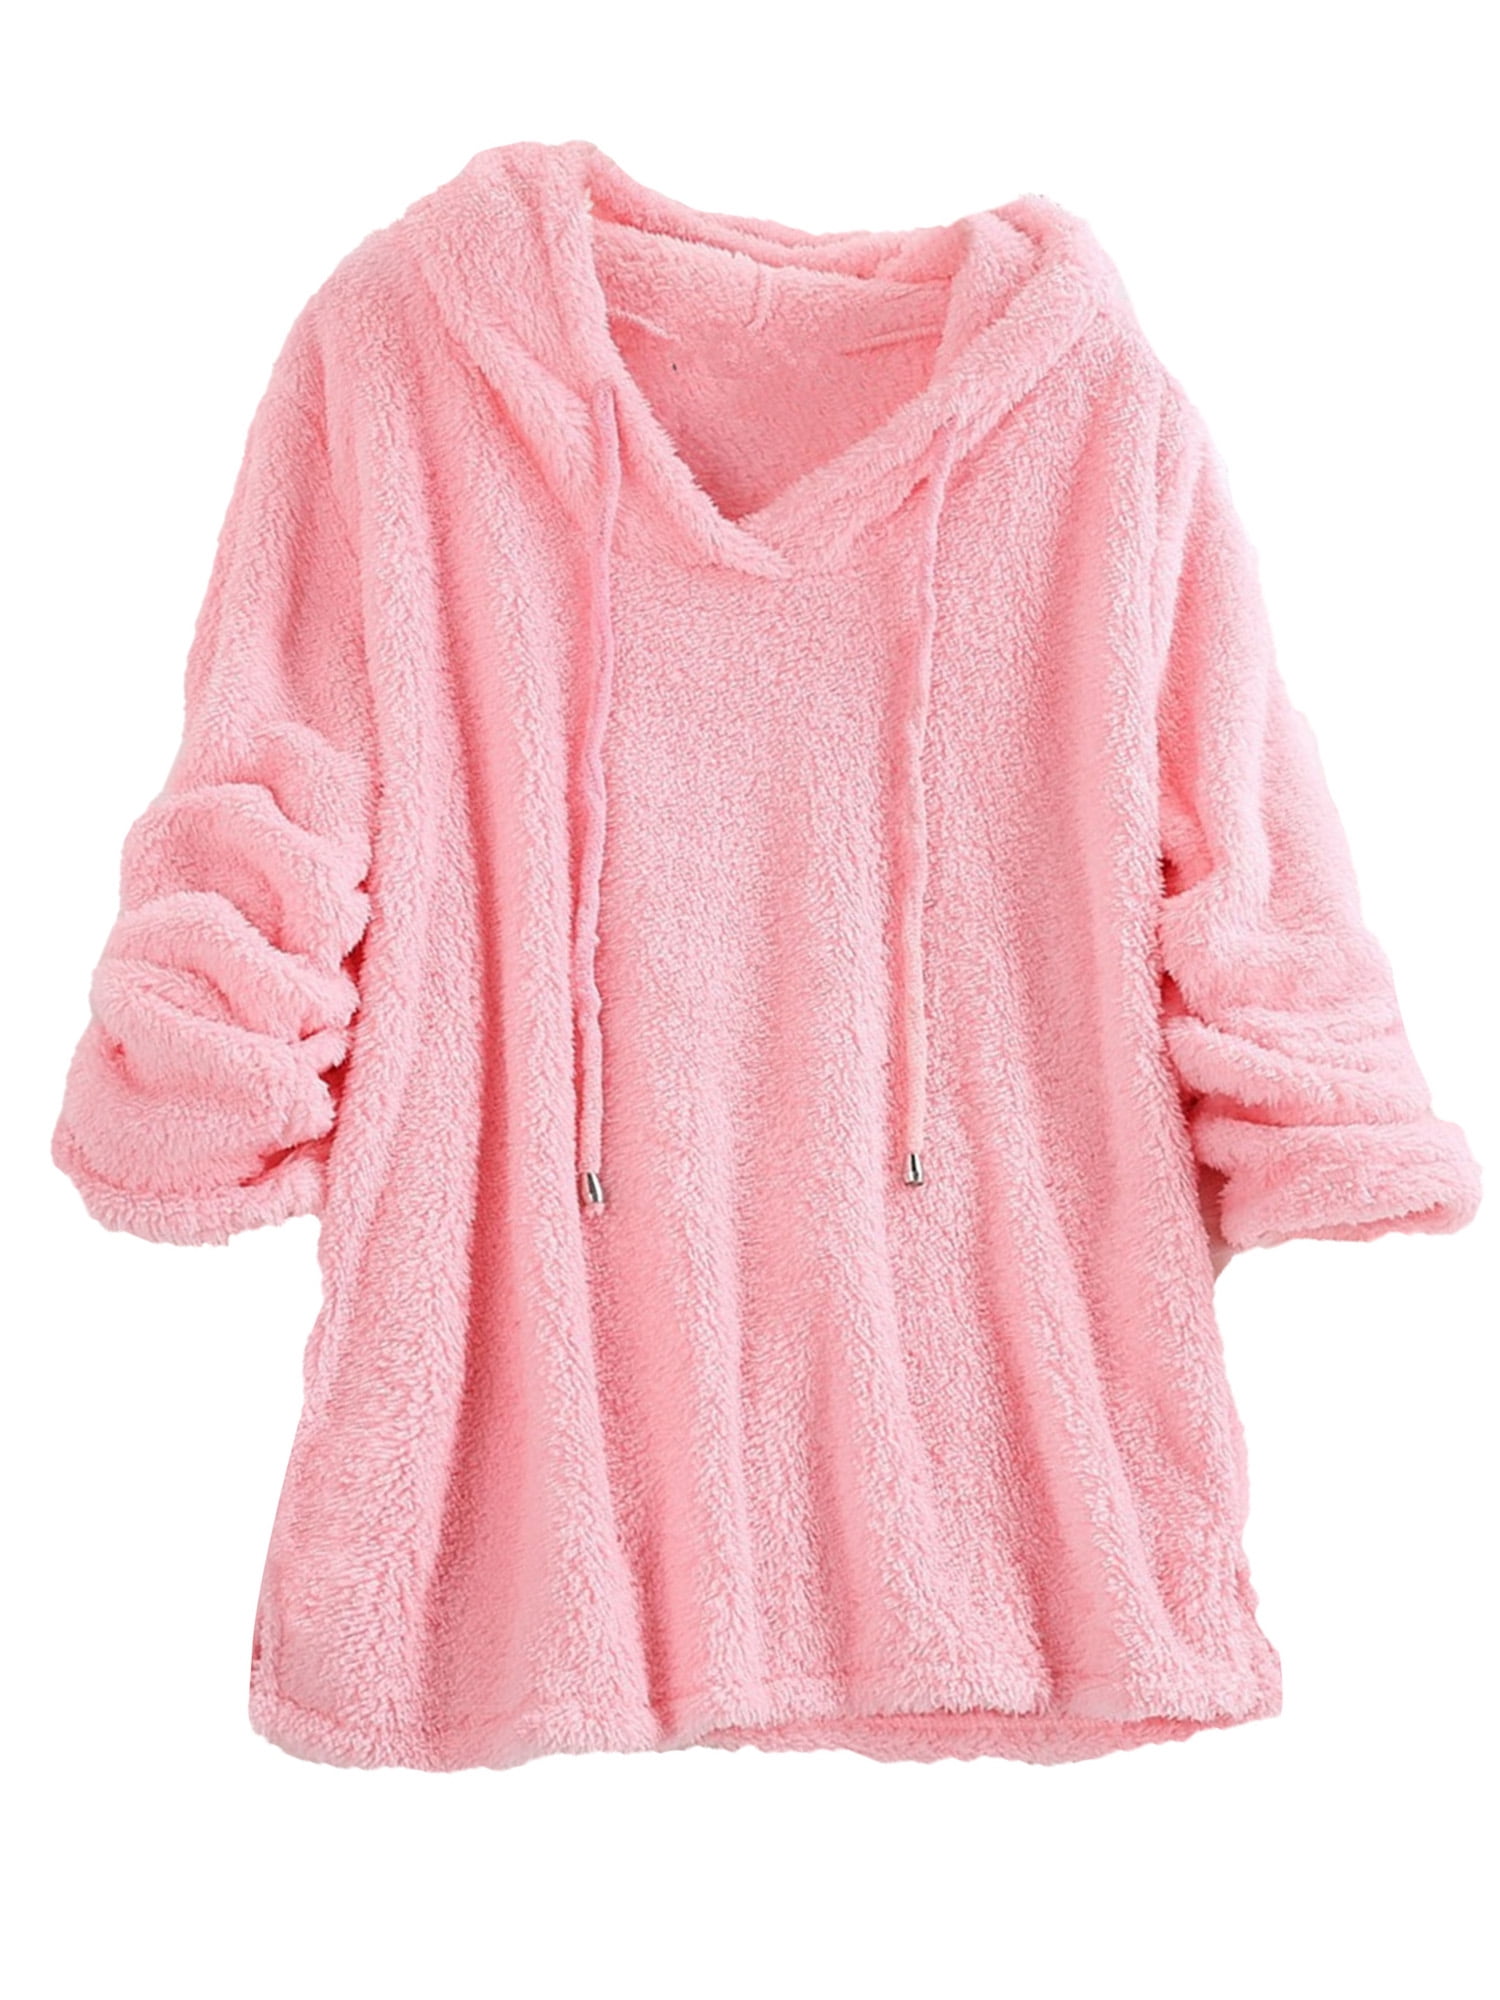 URIBAKE Women Sweatshirt Winter Warm Fleece Leopard Patchwork Button Hem Plus Size Hoodie Top Sweater Blouse